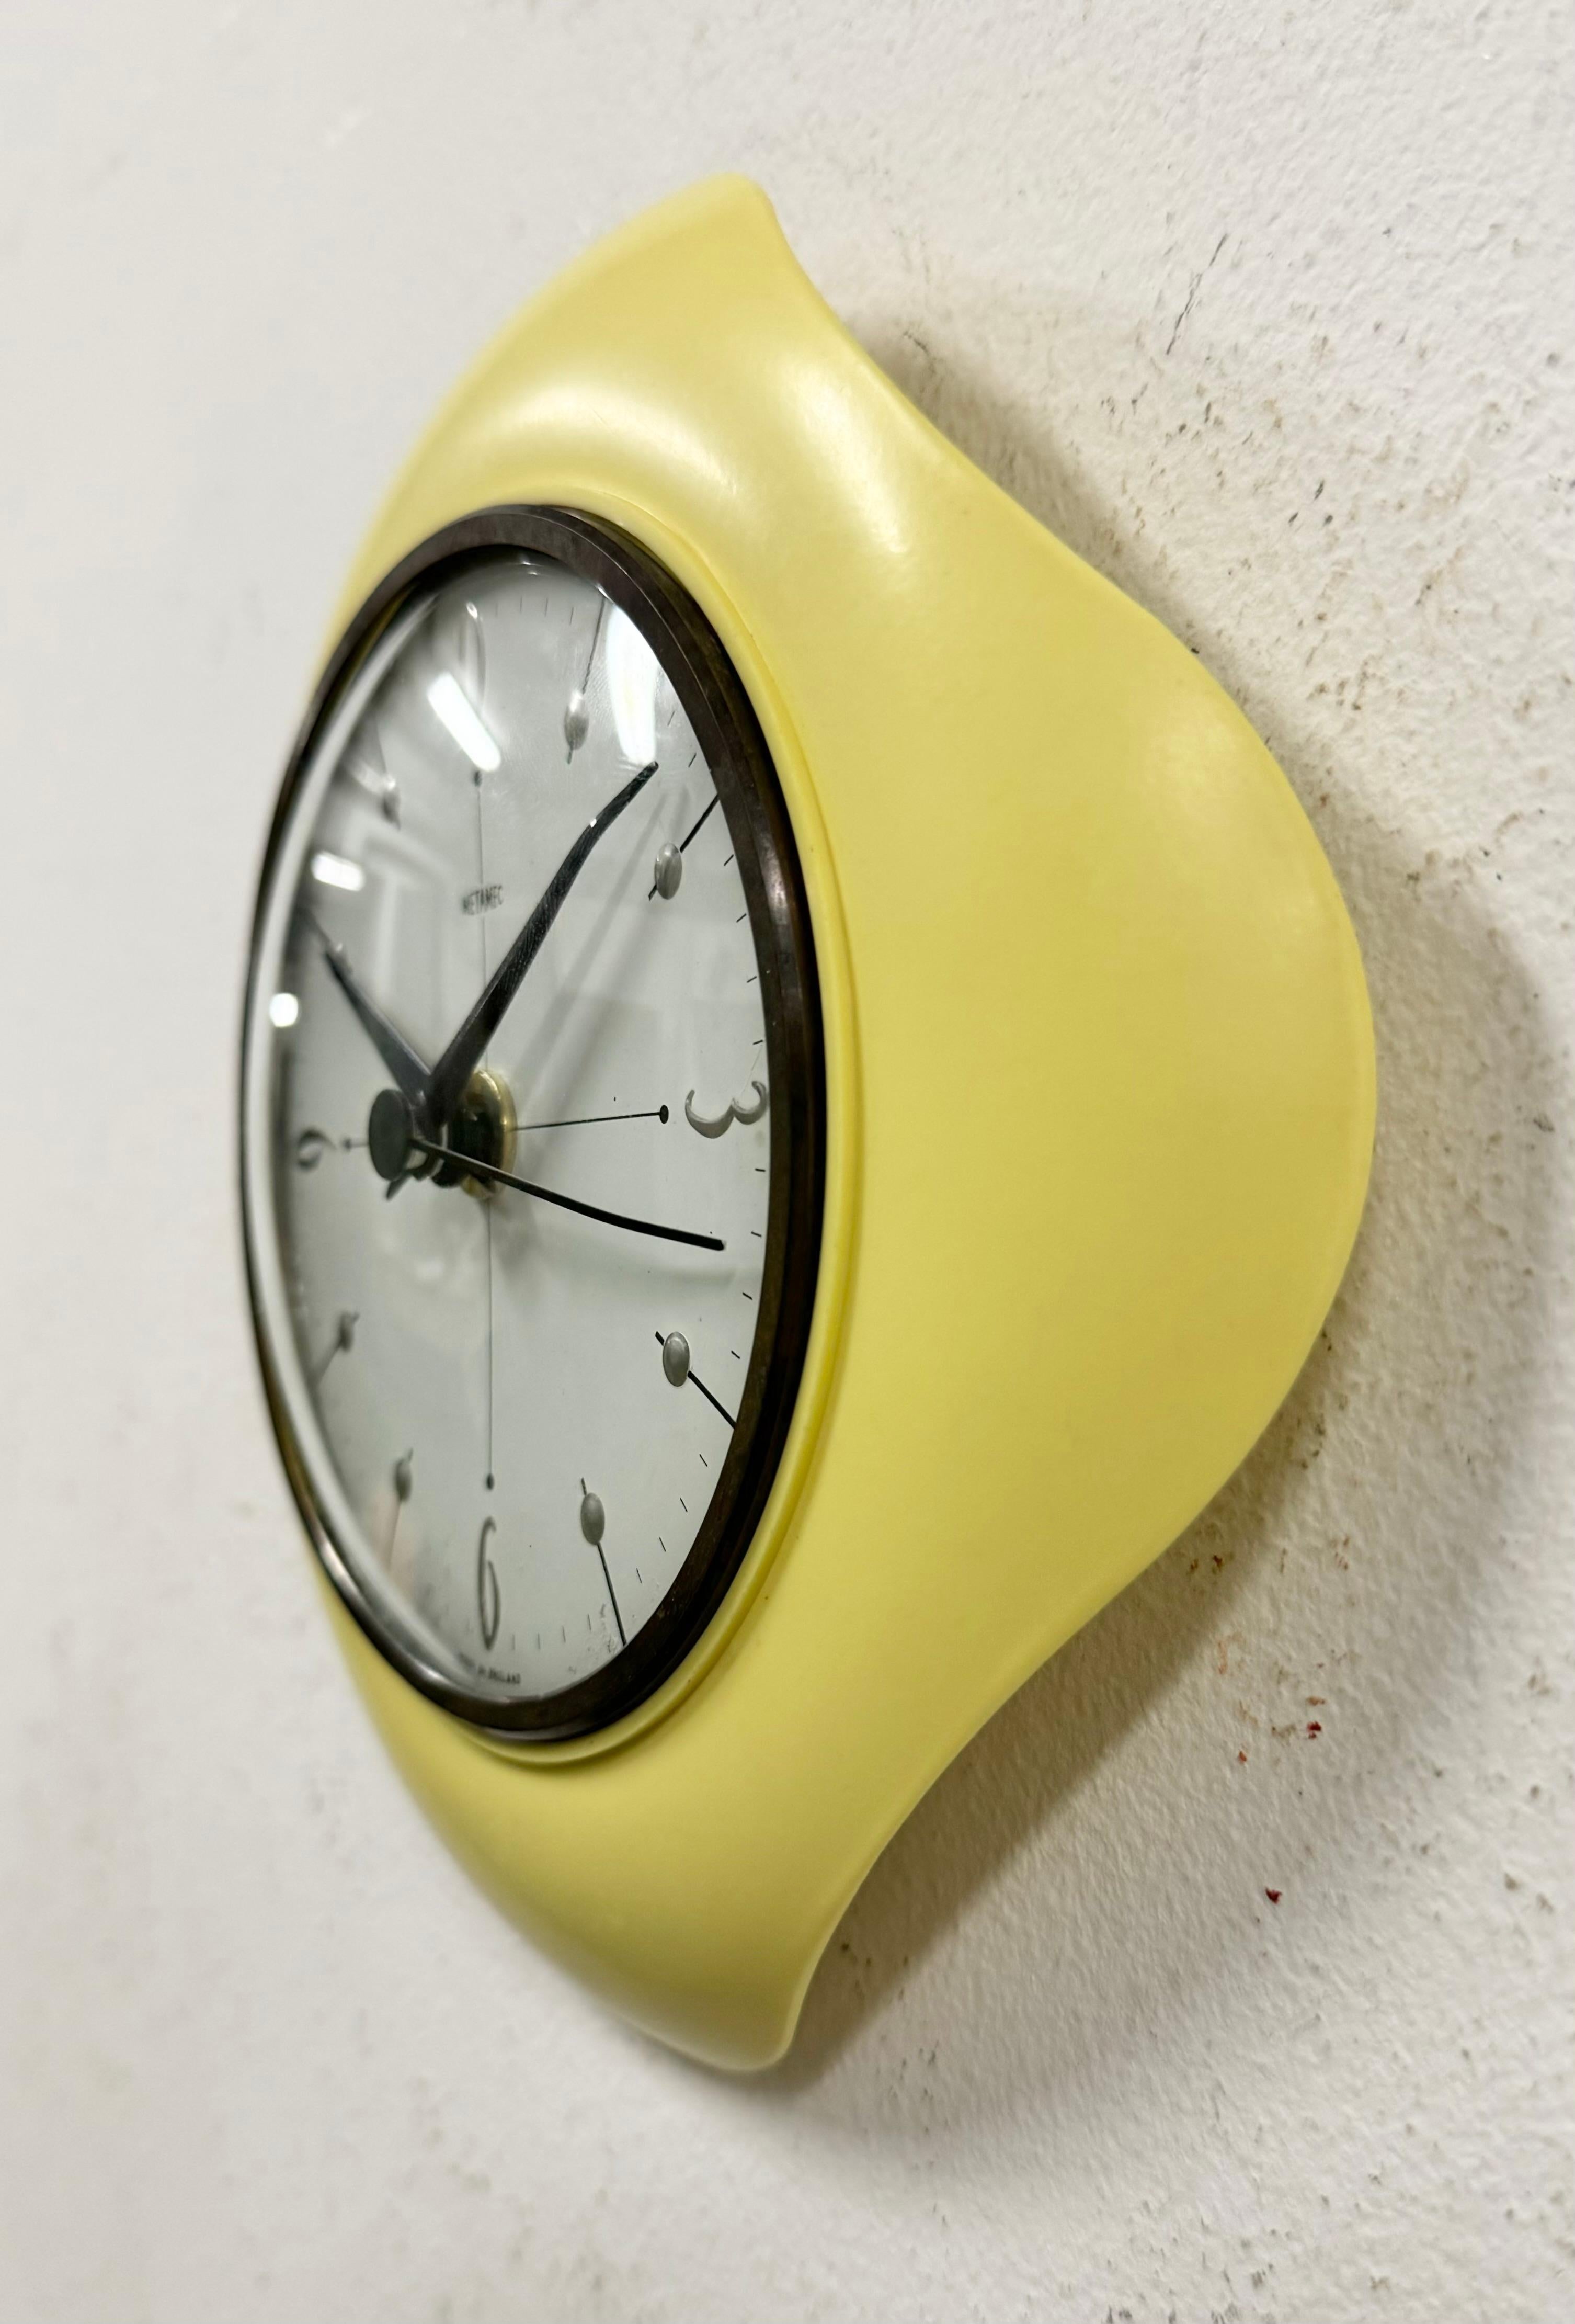 Industrial Vintage Yellow Bakelite Wall Clock from Metamec, 1970s For Sale